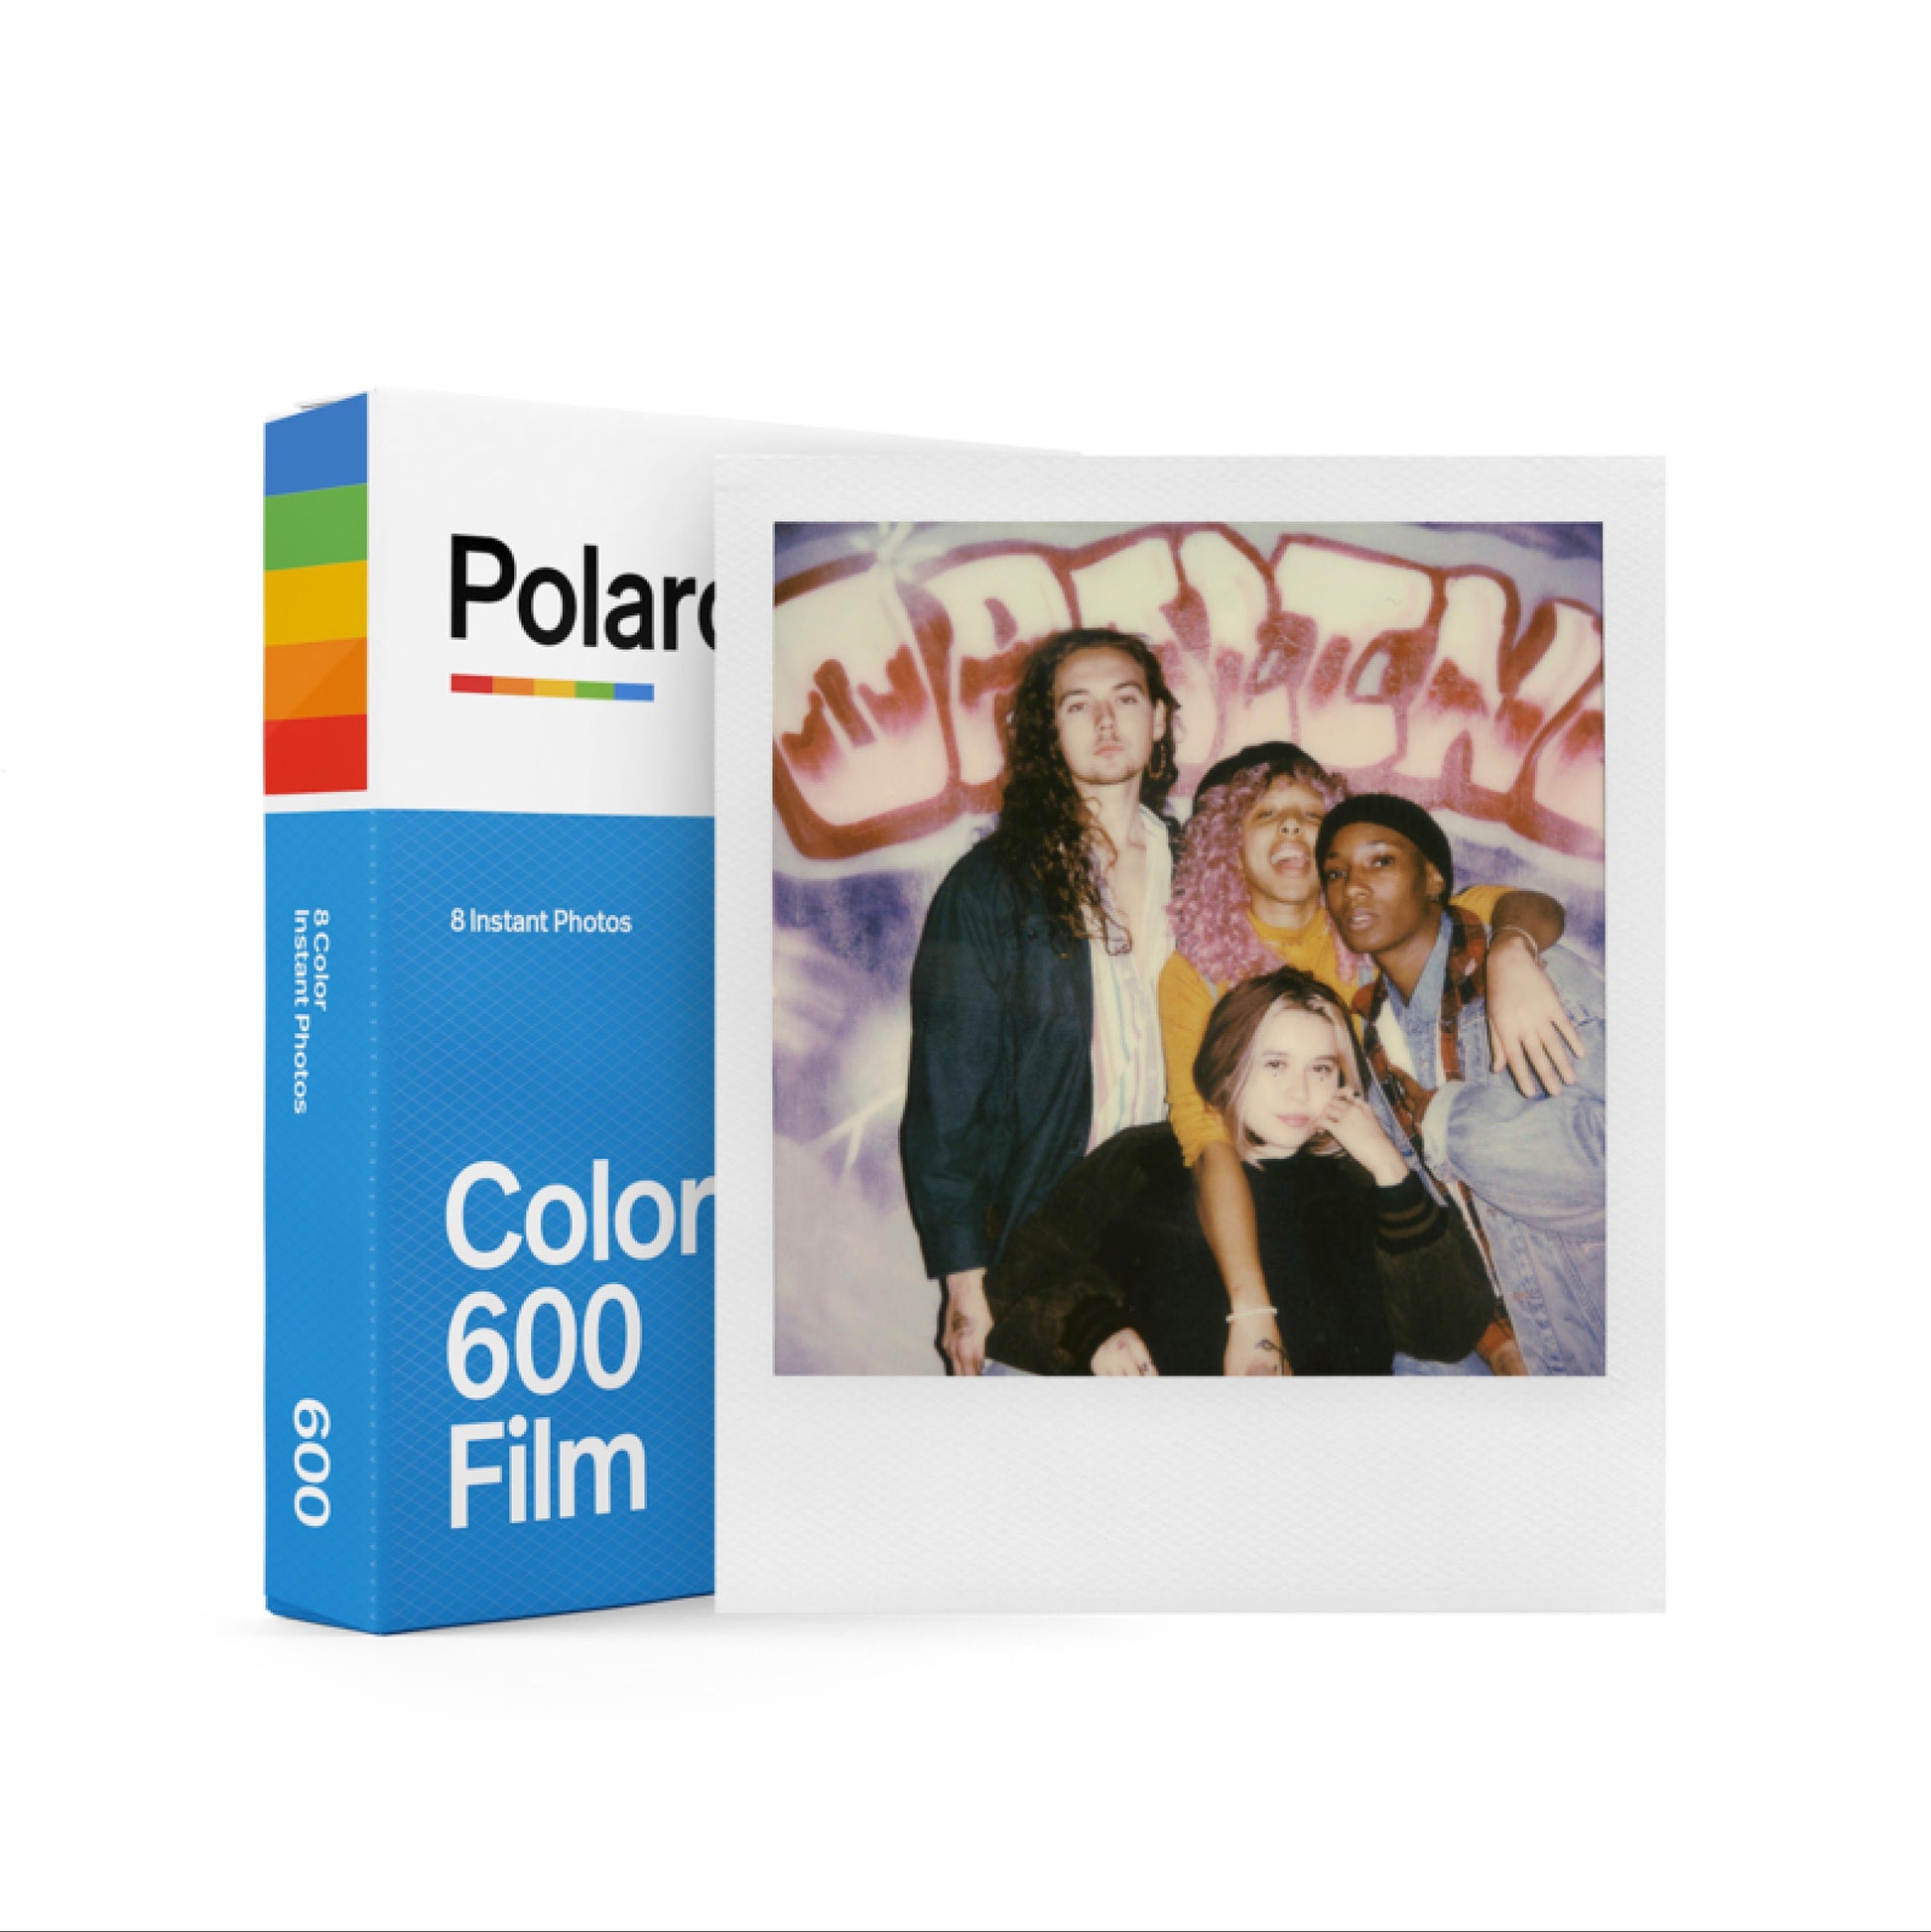 Polaroid Supercolor 635CL instant film camera